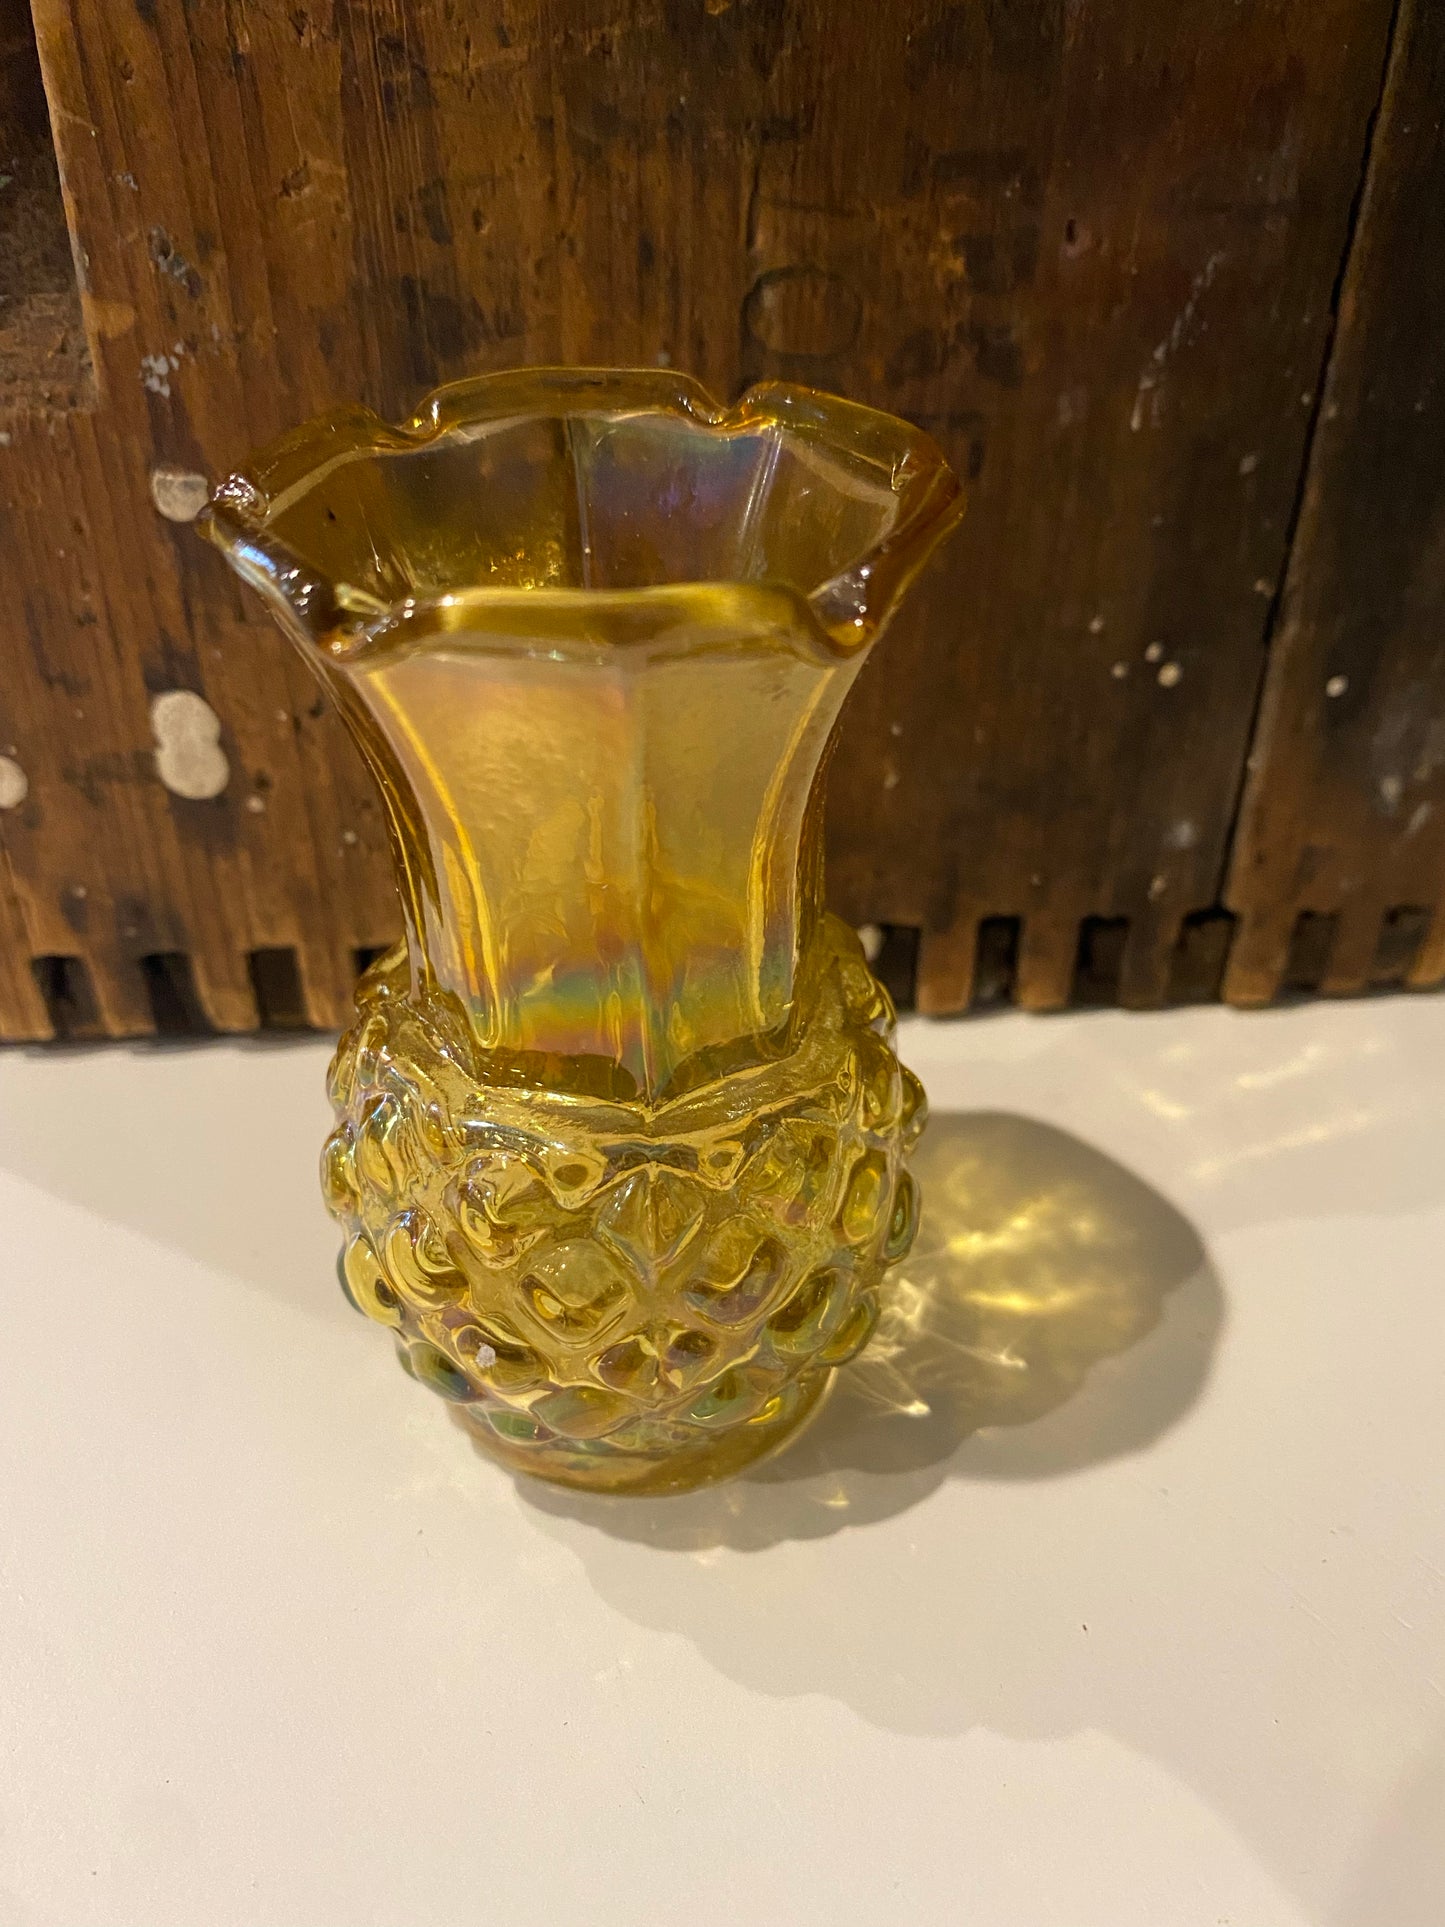 Vintage inspired vases